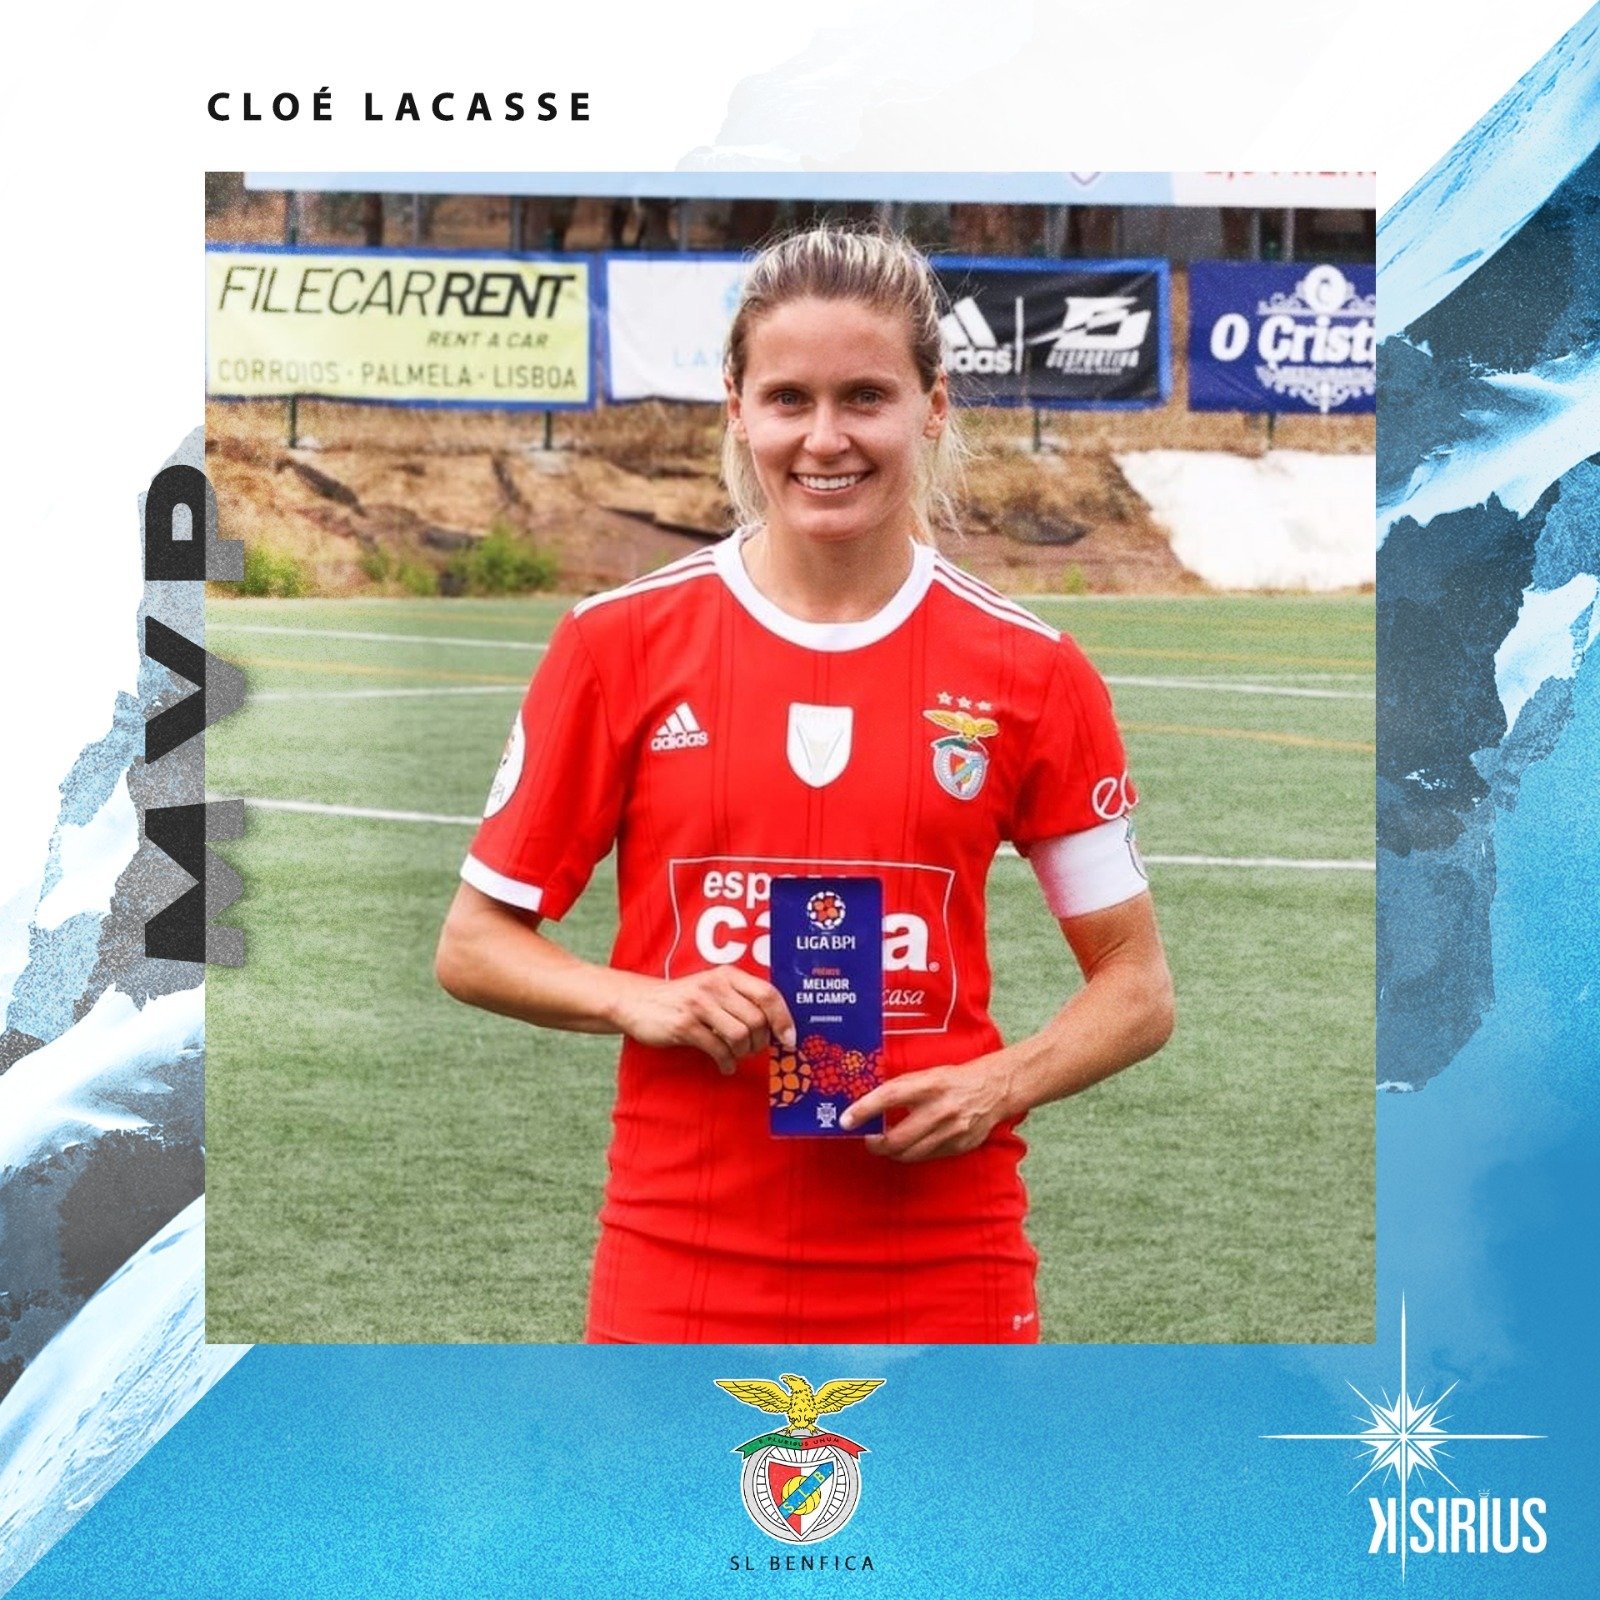 MVP: Cloé Lacasse (SL Benfica)